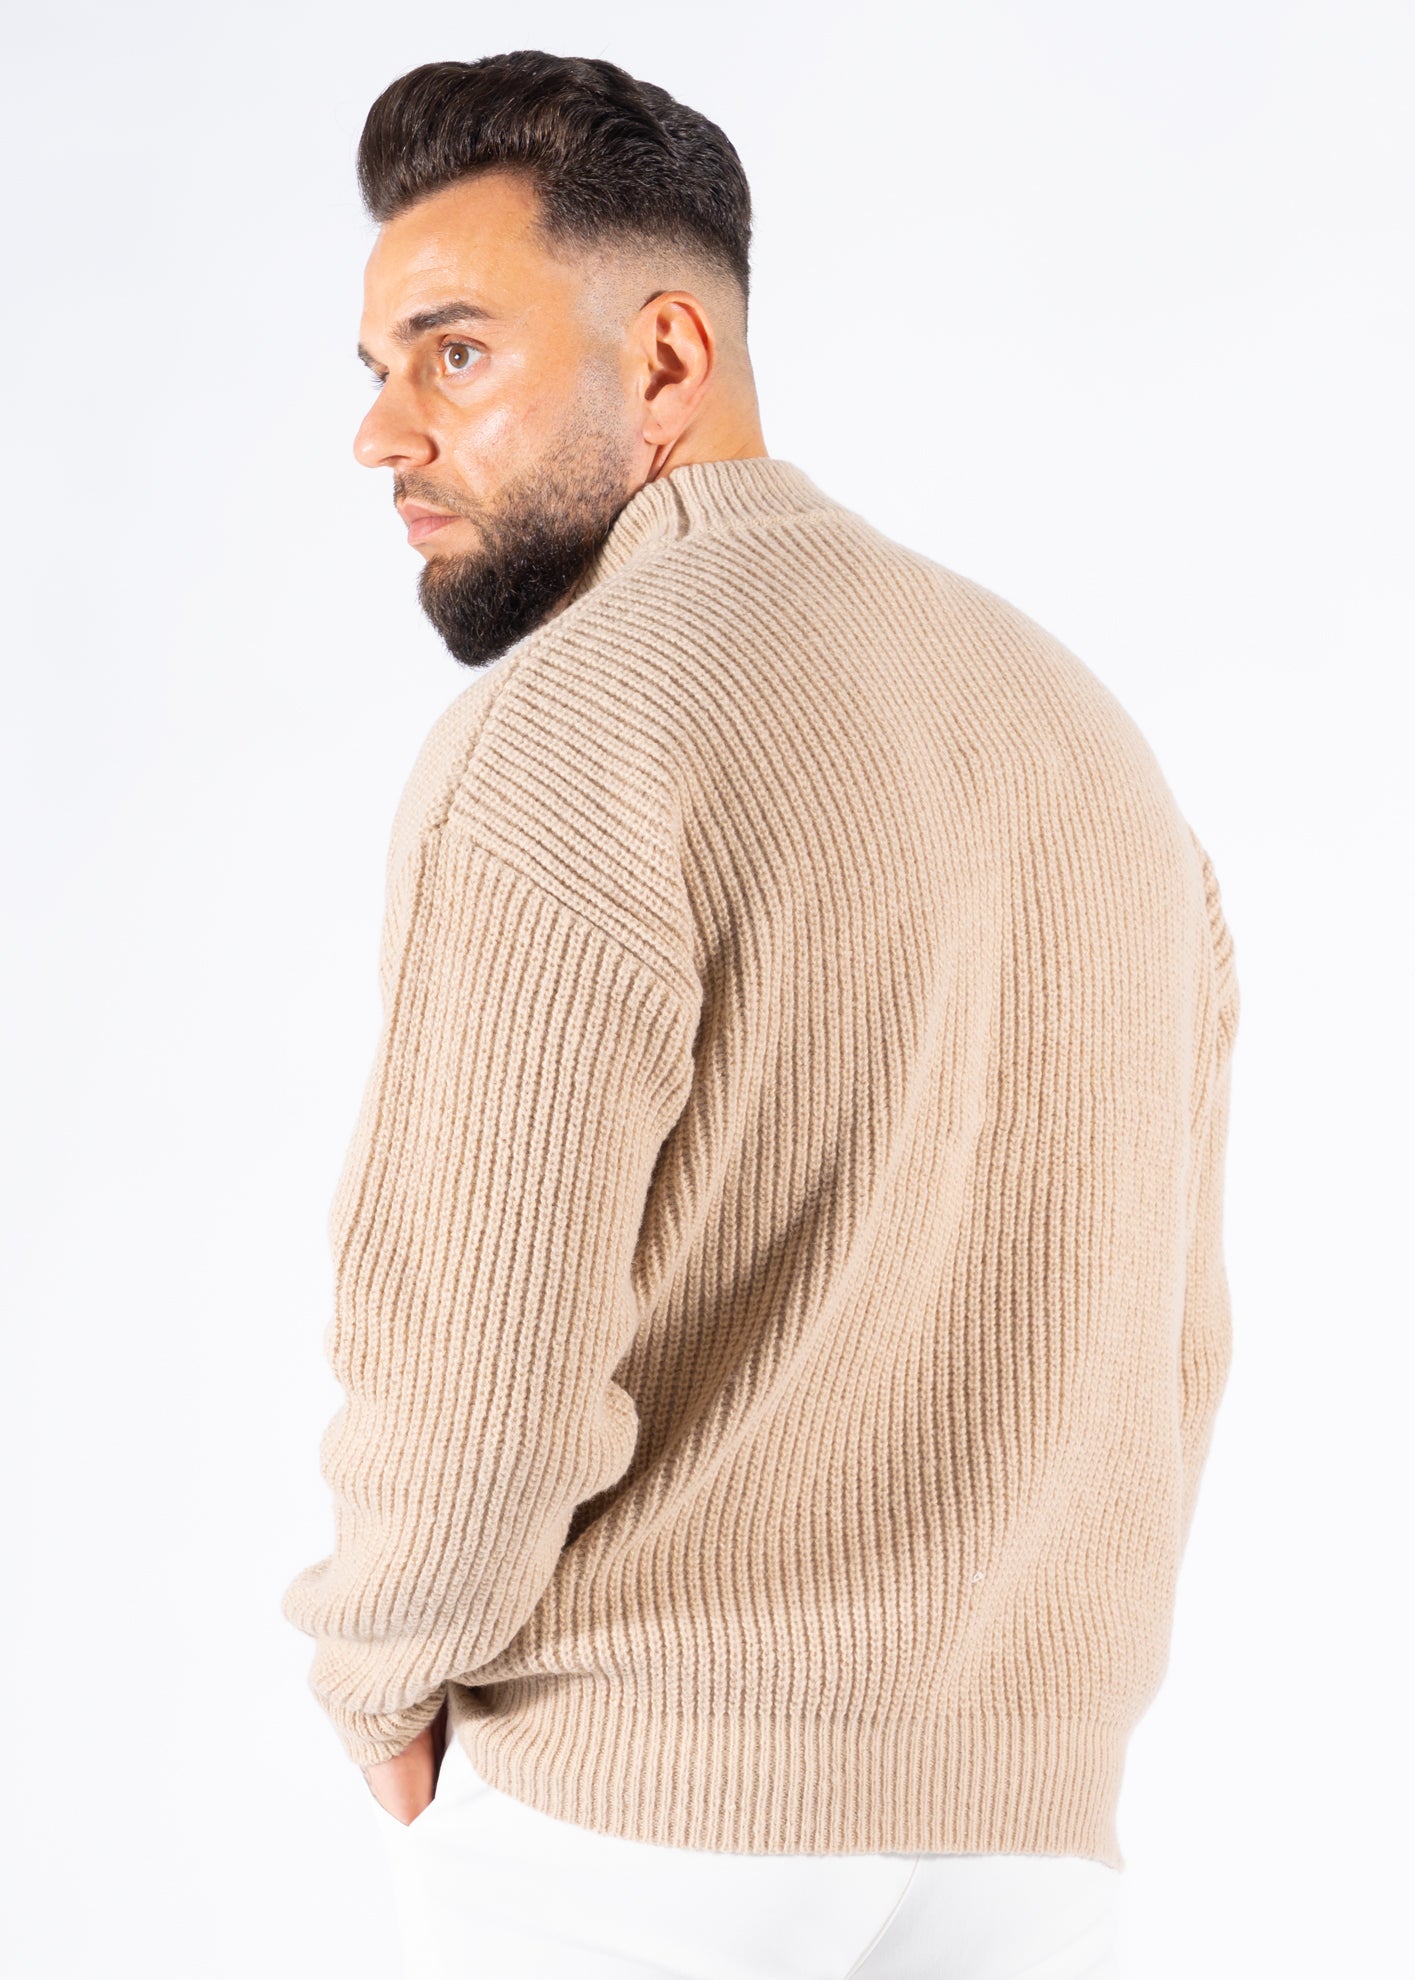 Sweater turtleneck knitted beige oversized